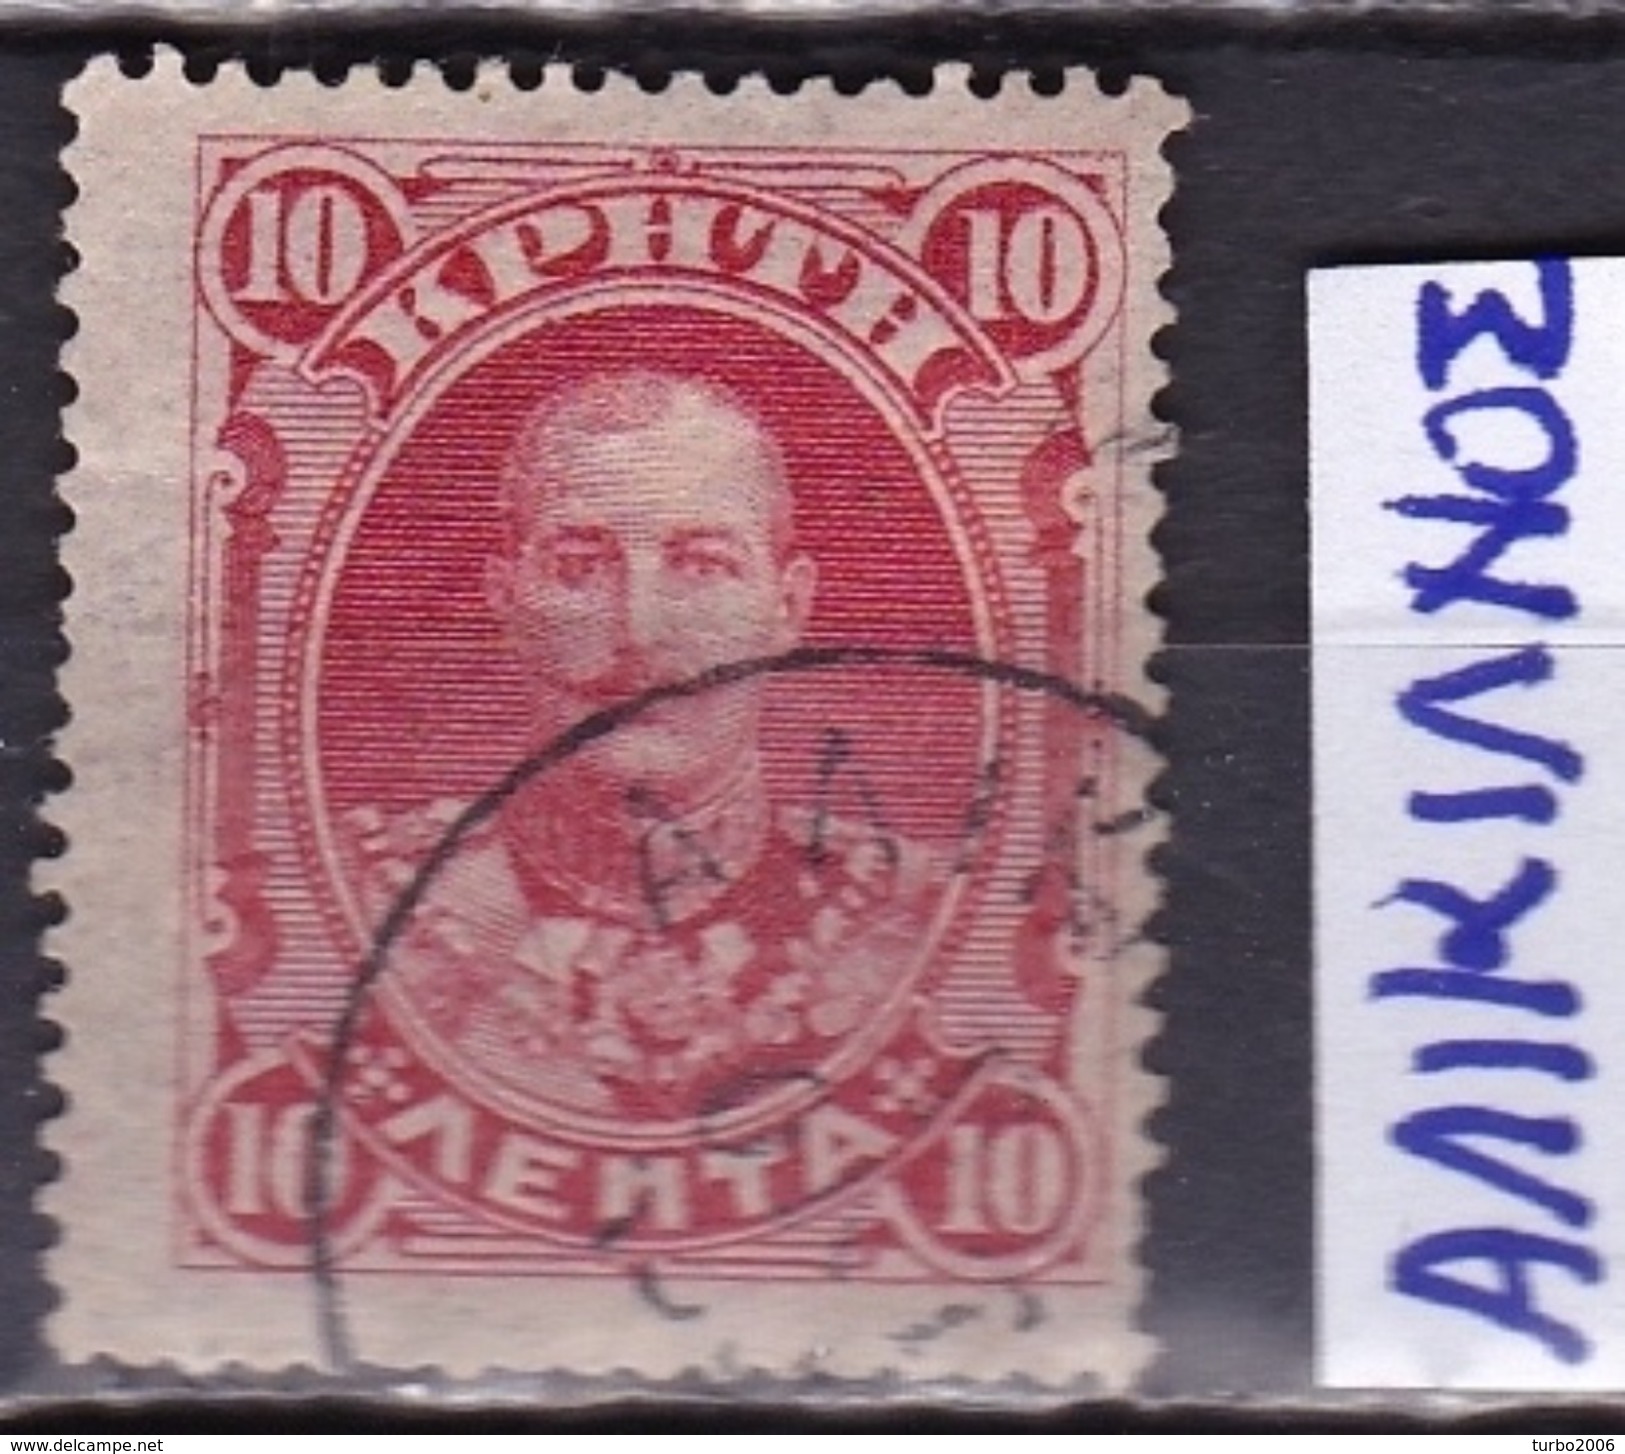 CRETE Cancellation ΑΛΙΚΙΑΝΟΣ On 1900 1st Issue Of The Cretan State 10 L. Red Vl. 3 - Kreta